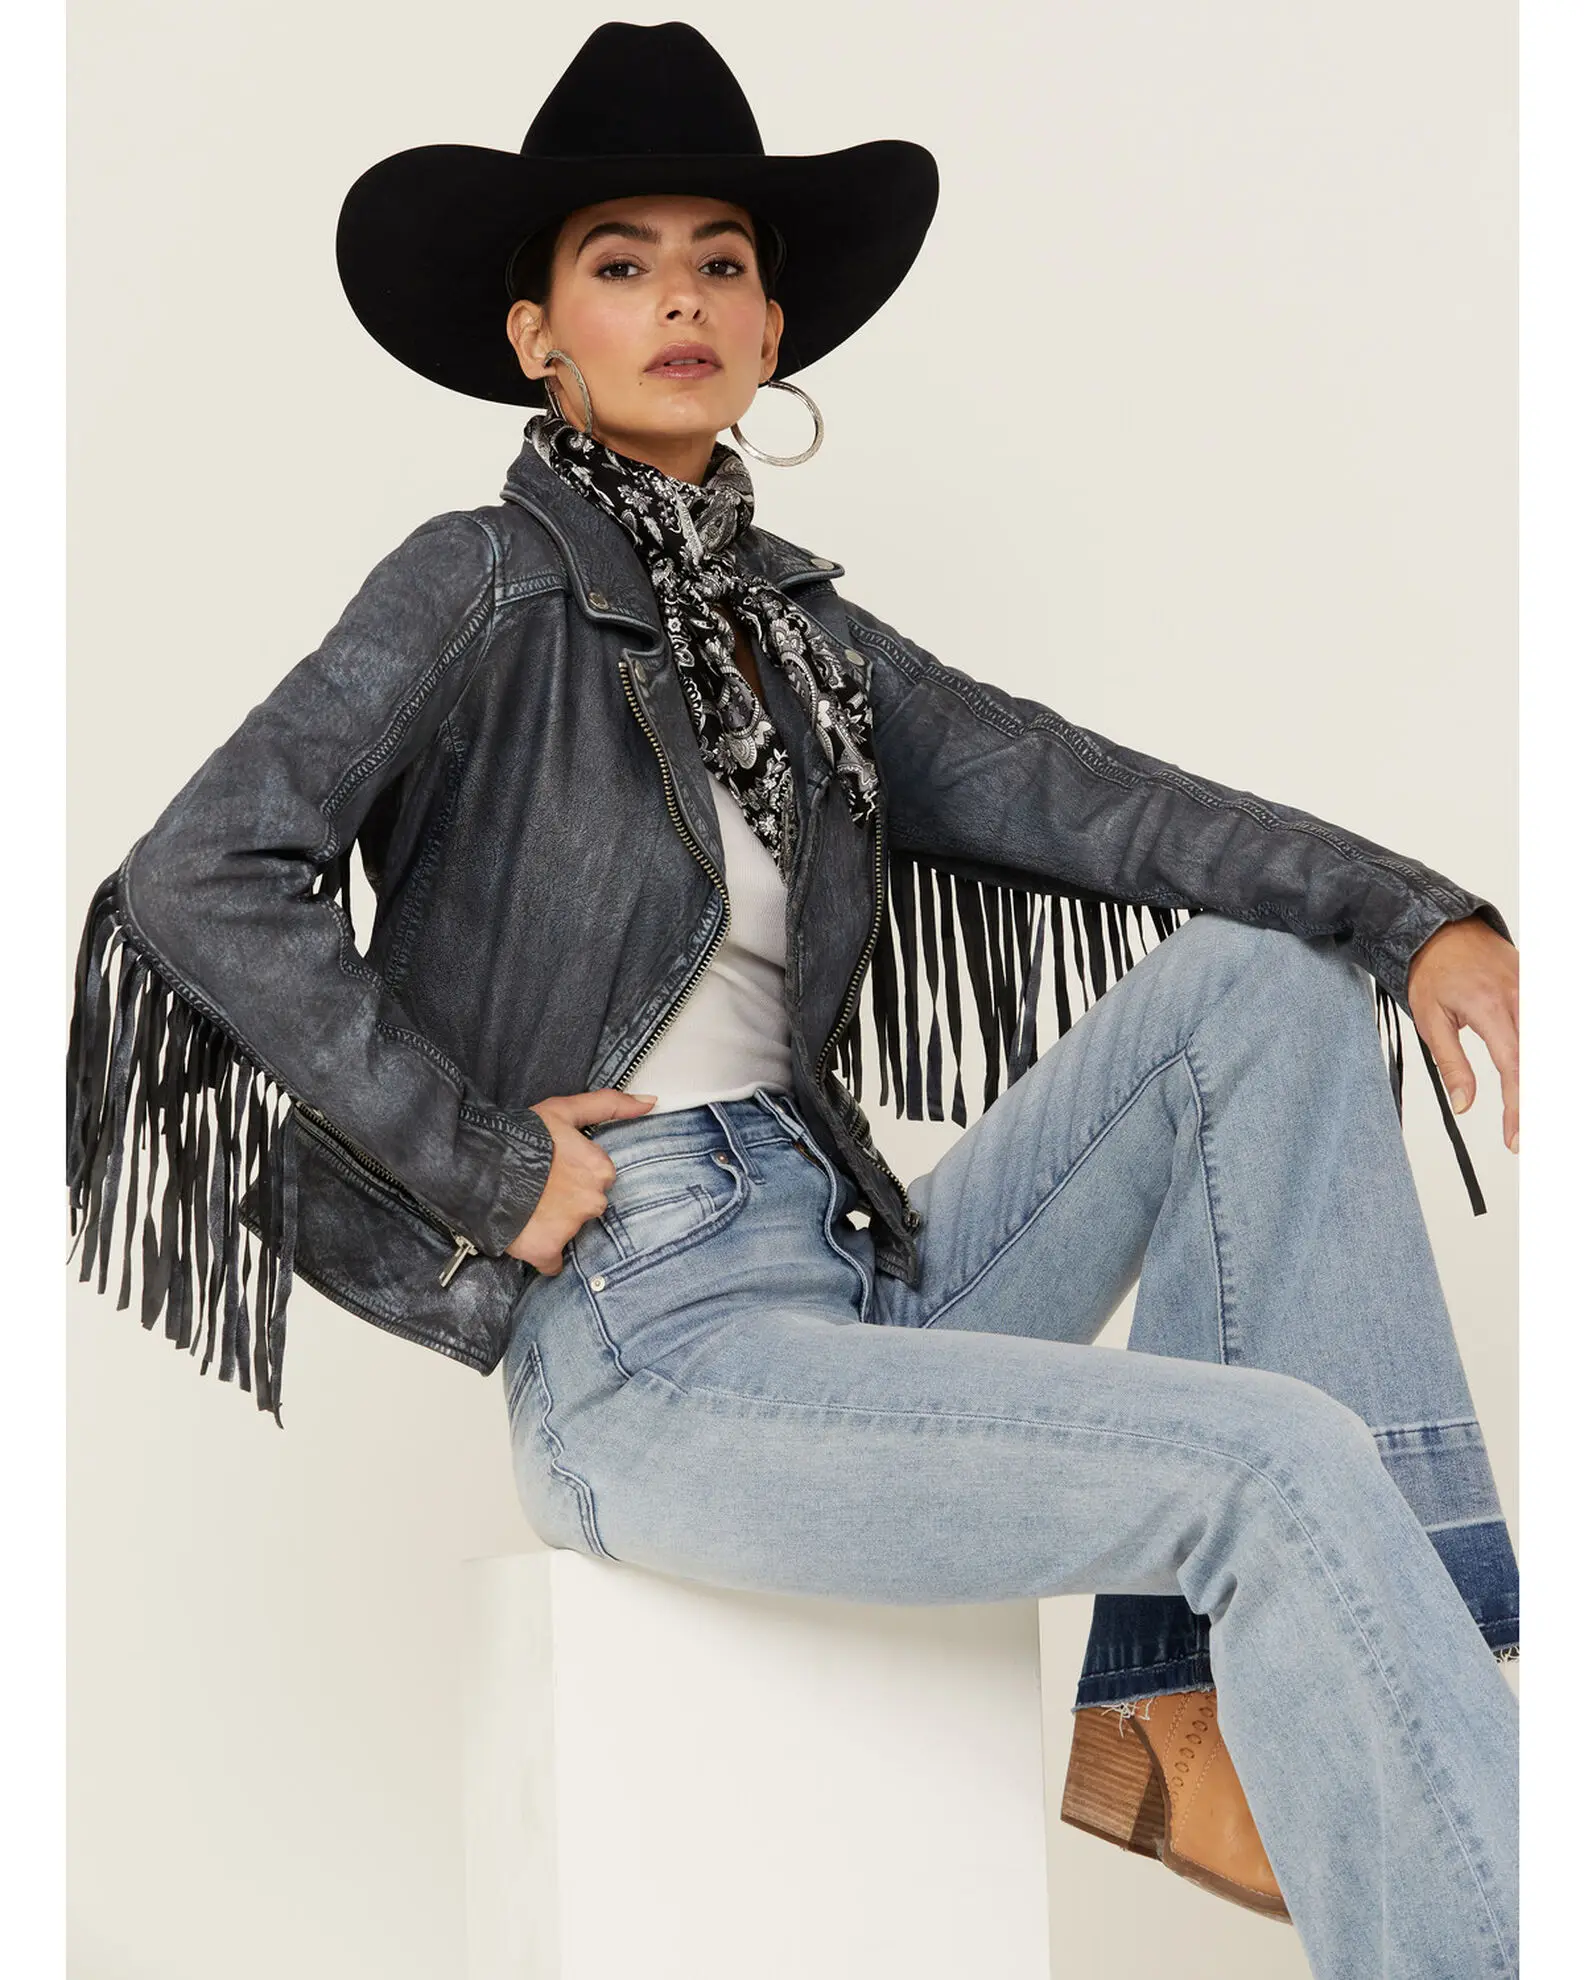 Cowgirl Suede Leather Women Jacket, Fashion Beaded Bones Braids Long Sleeve Cow Suede Leather Fringe Western Jacket